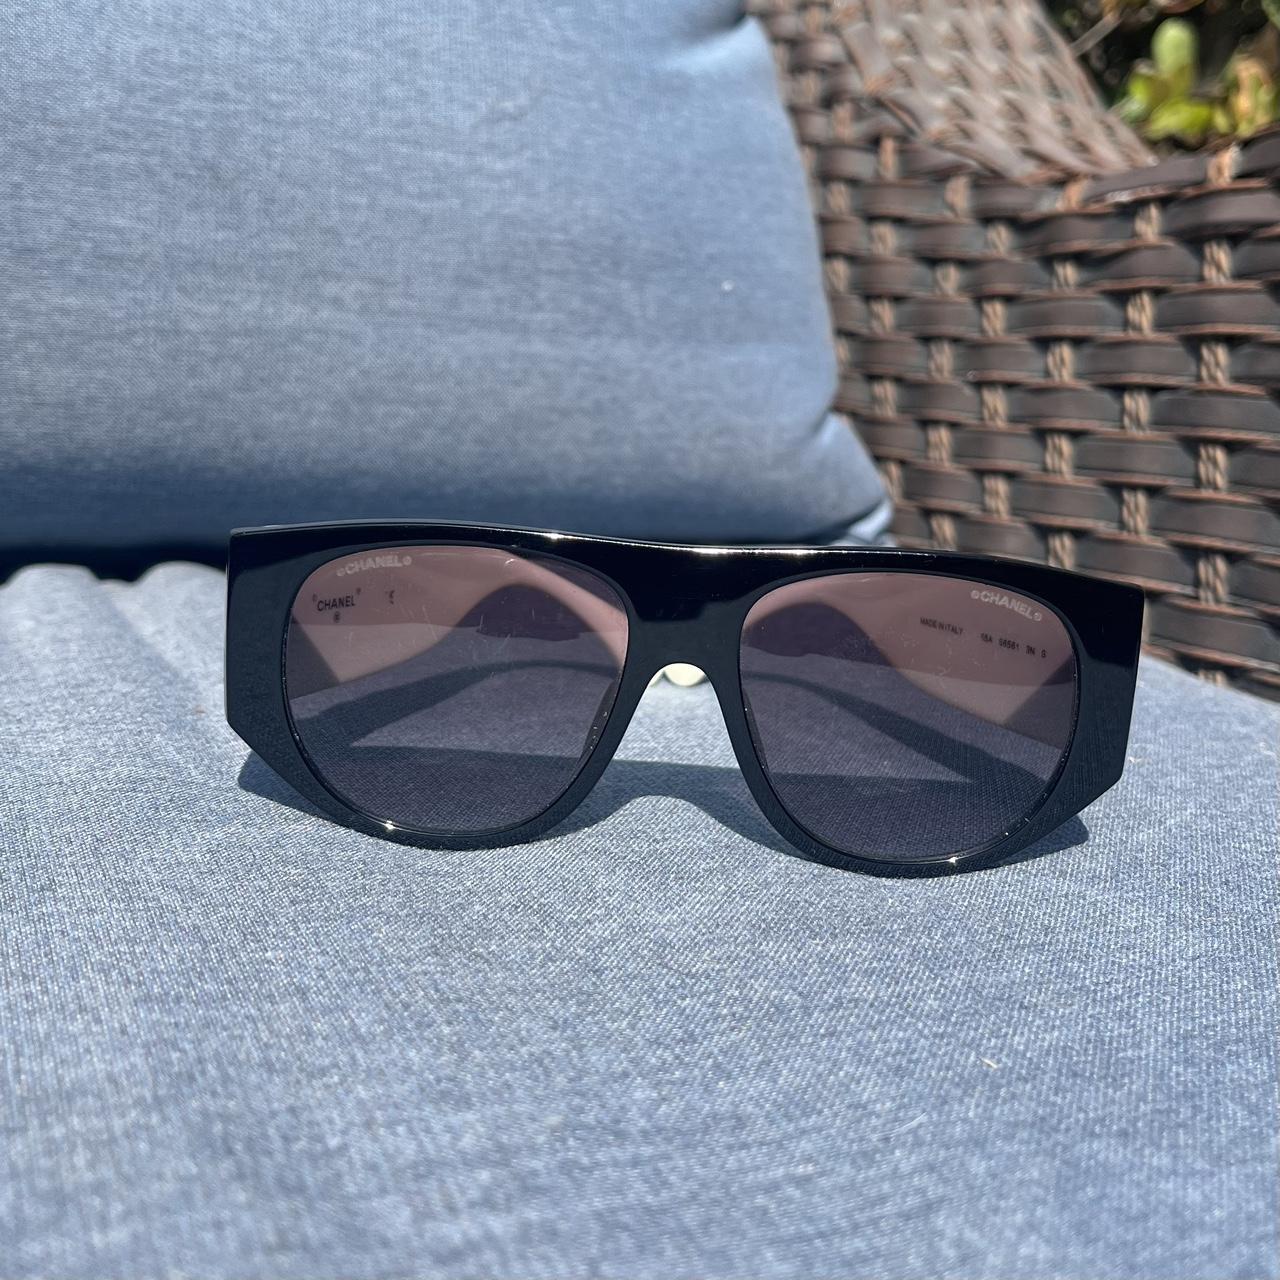 Chanel pilot sunglasses ss22 light wear minor - Depop